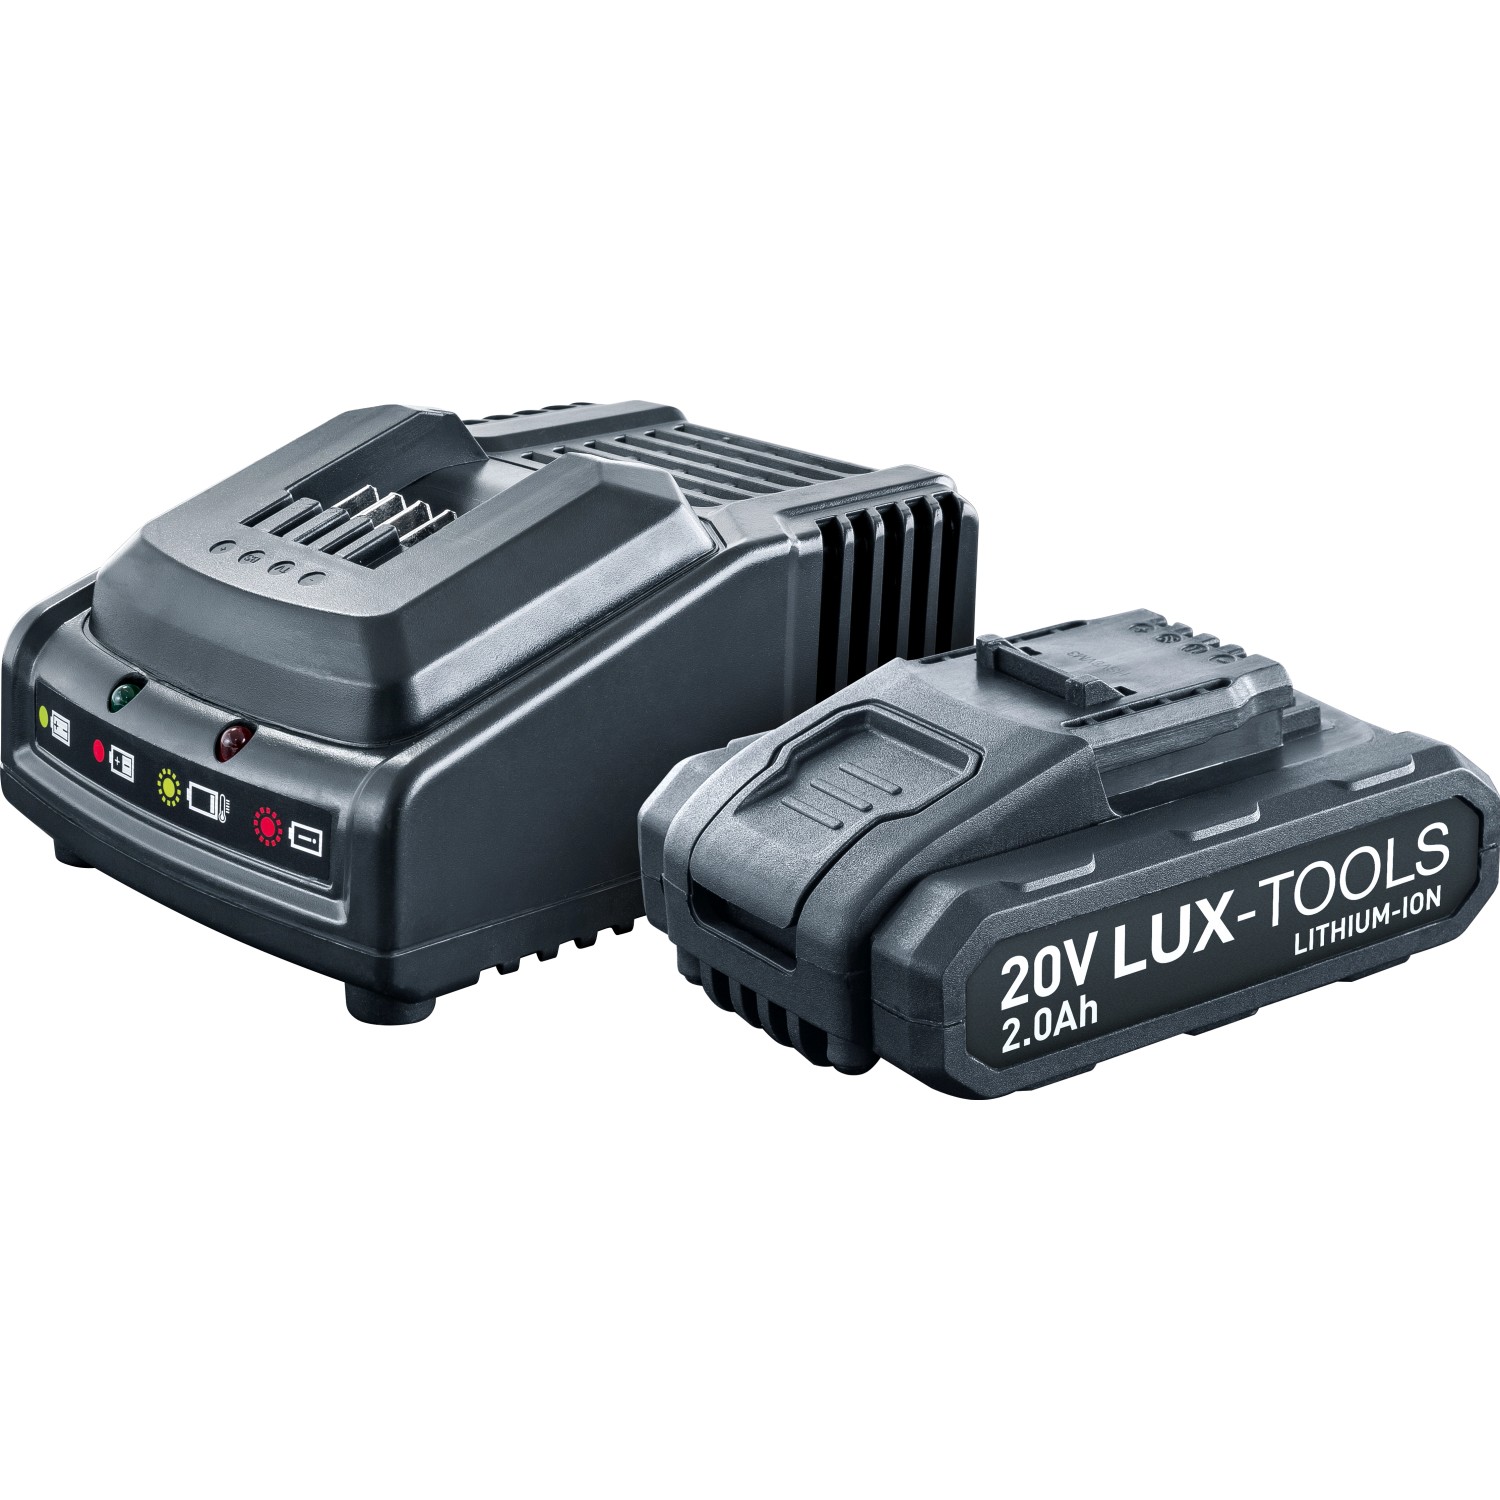 Lux tools аккумуляторная. Lux Tools 20v болгарка. Аккумулятор Lux Tools 20v. Lux Tools аккумуляторный инструмент 20v. Шуруповерт Lux Tools 20v.